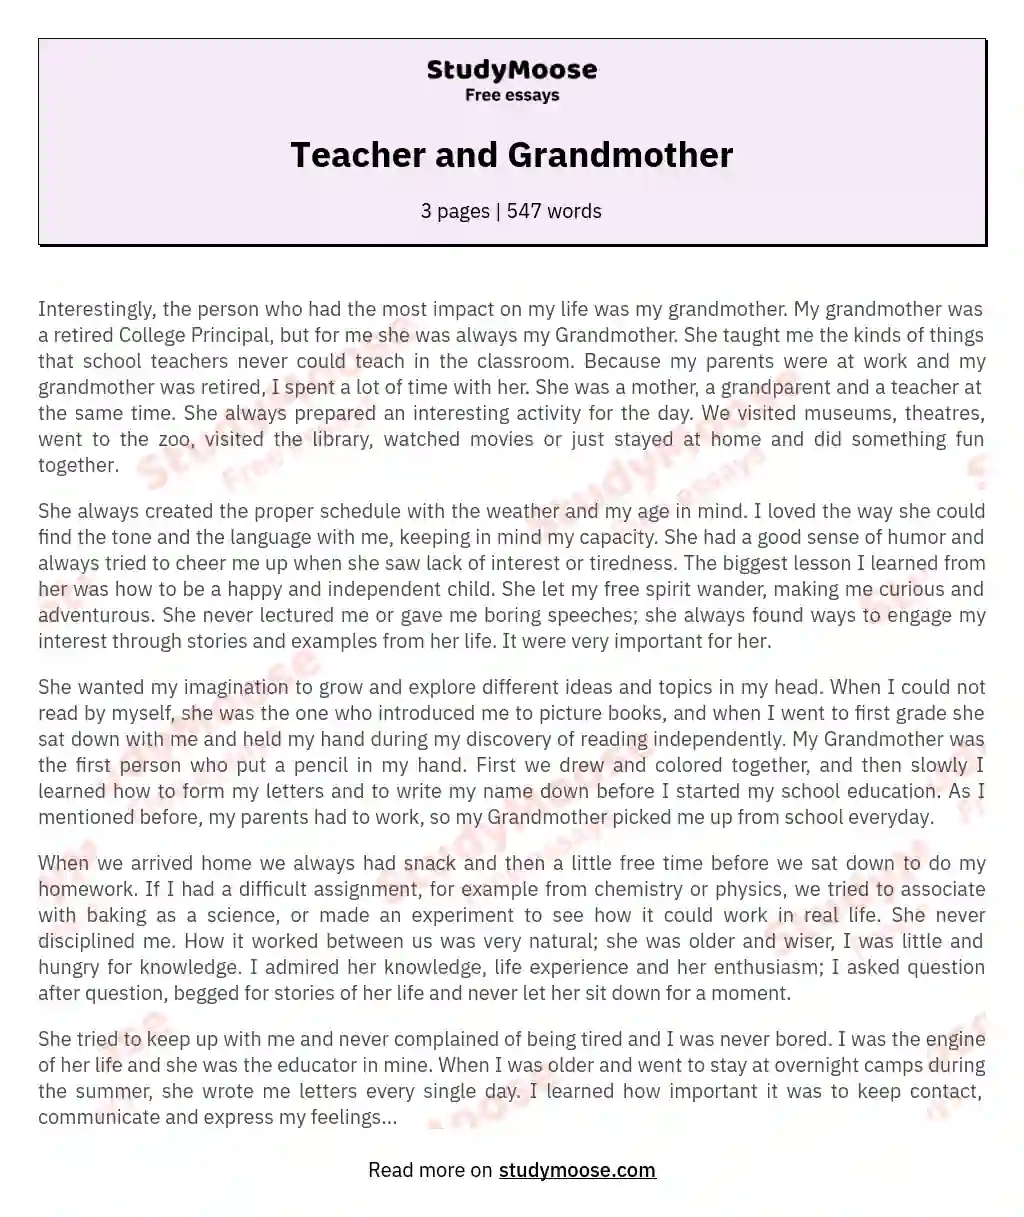 Teacher and Grandmother